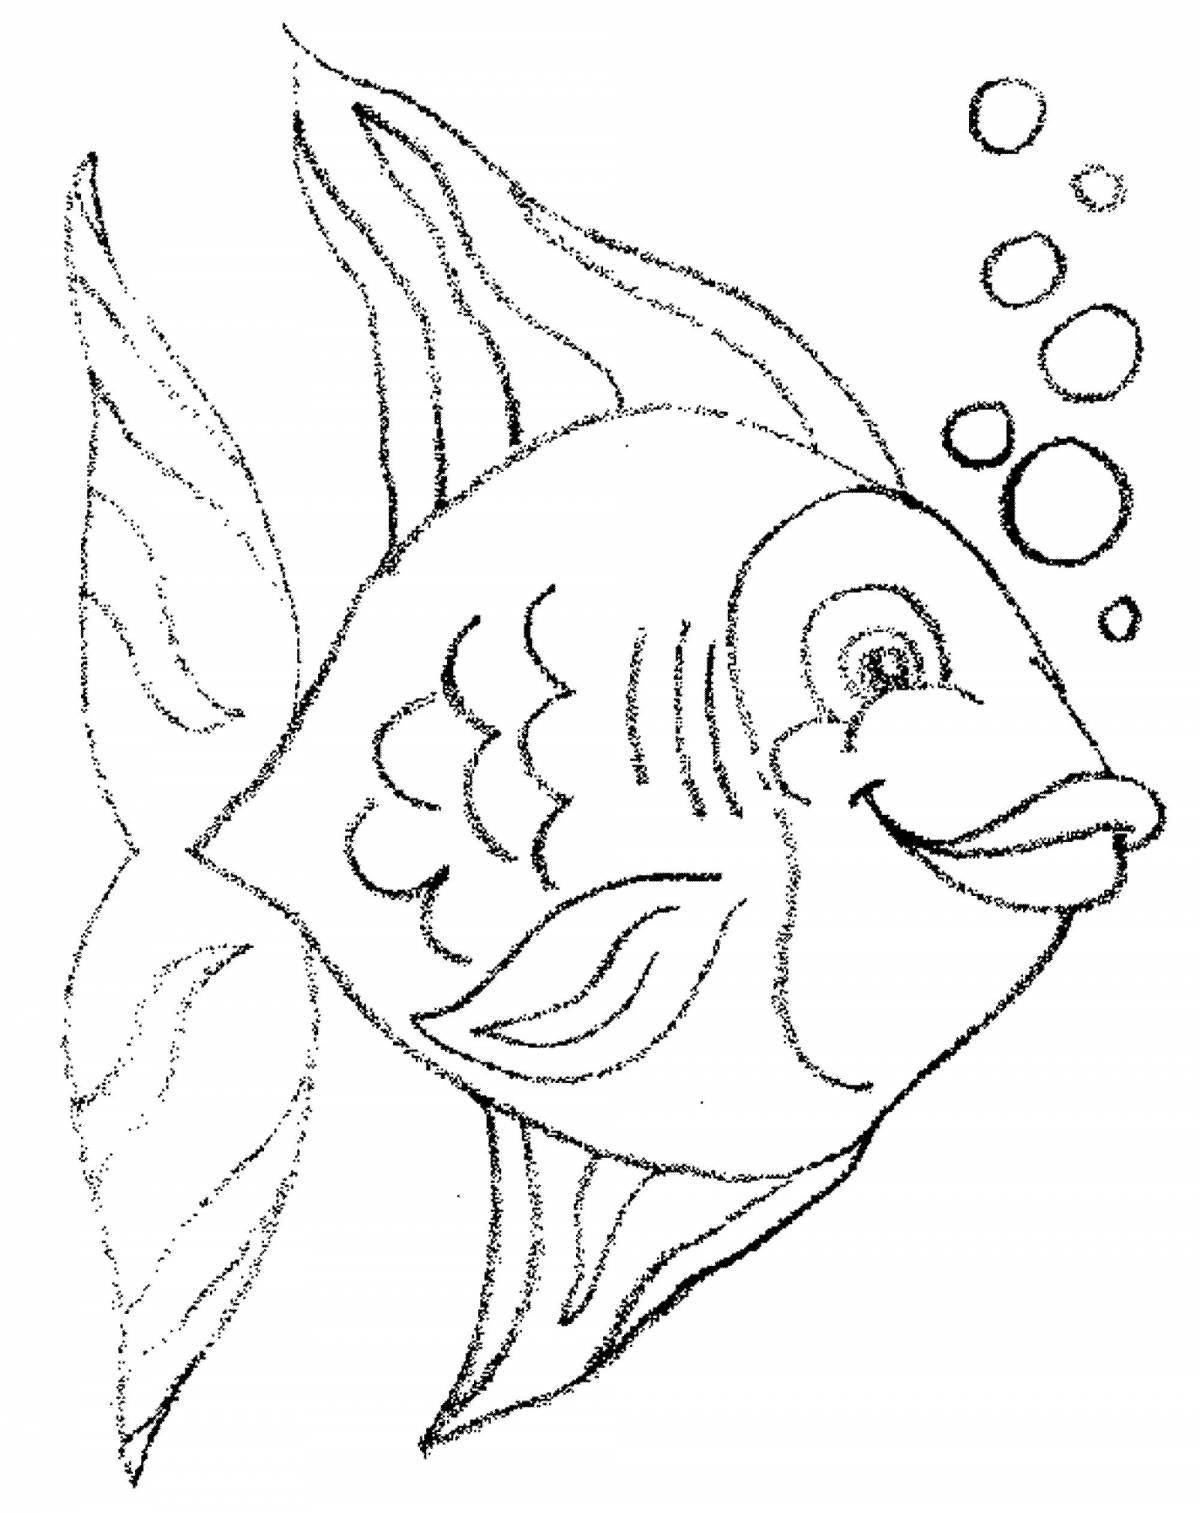 Vivid aquarium fish coloring page